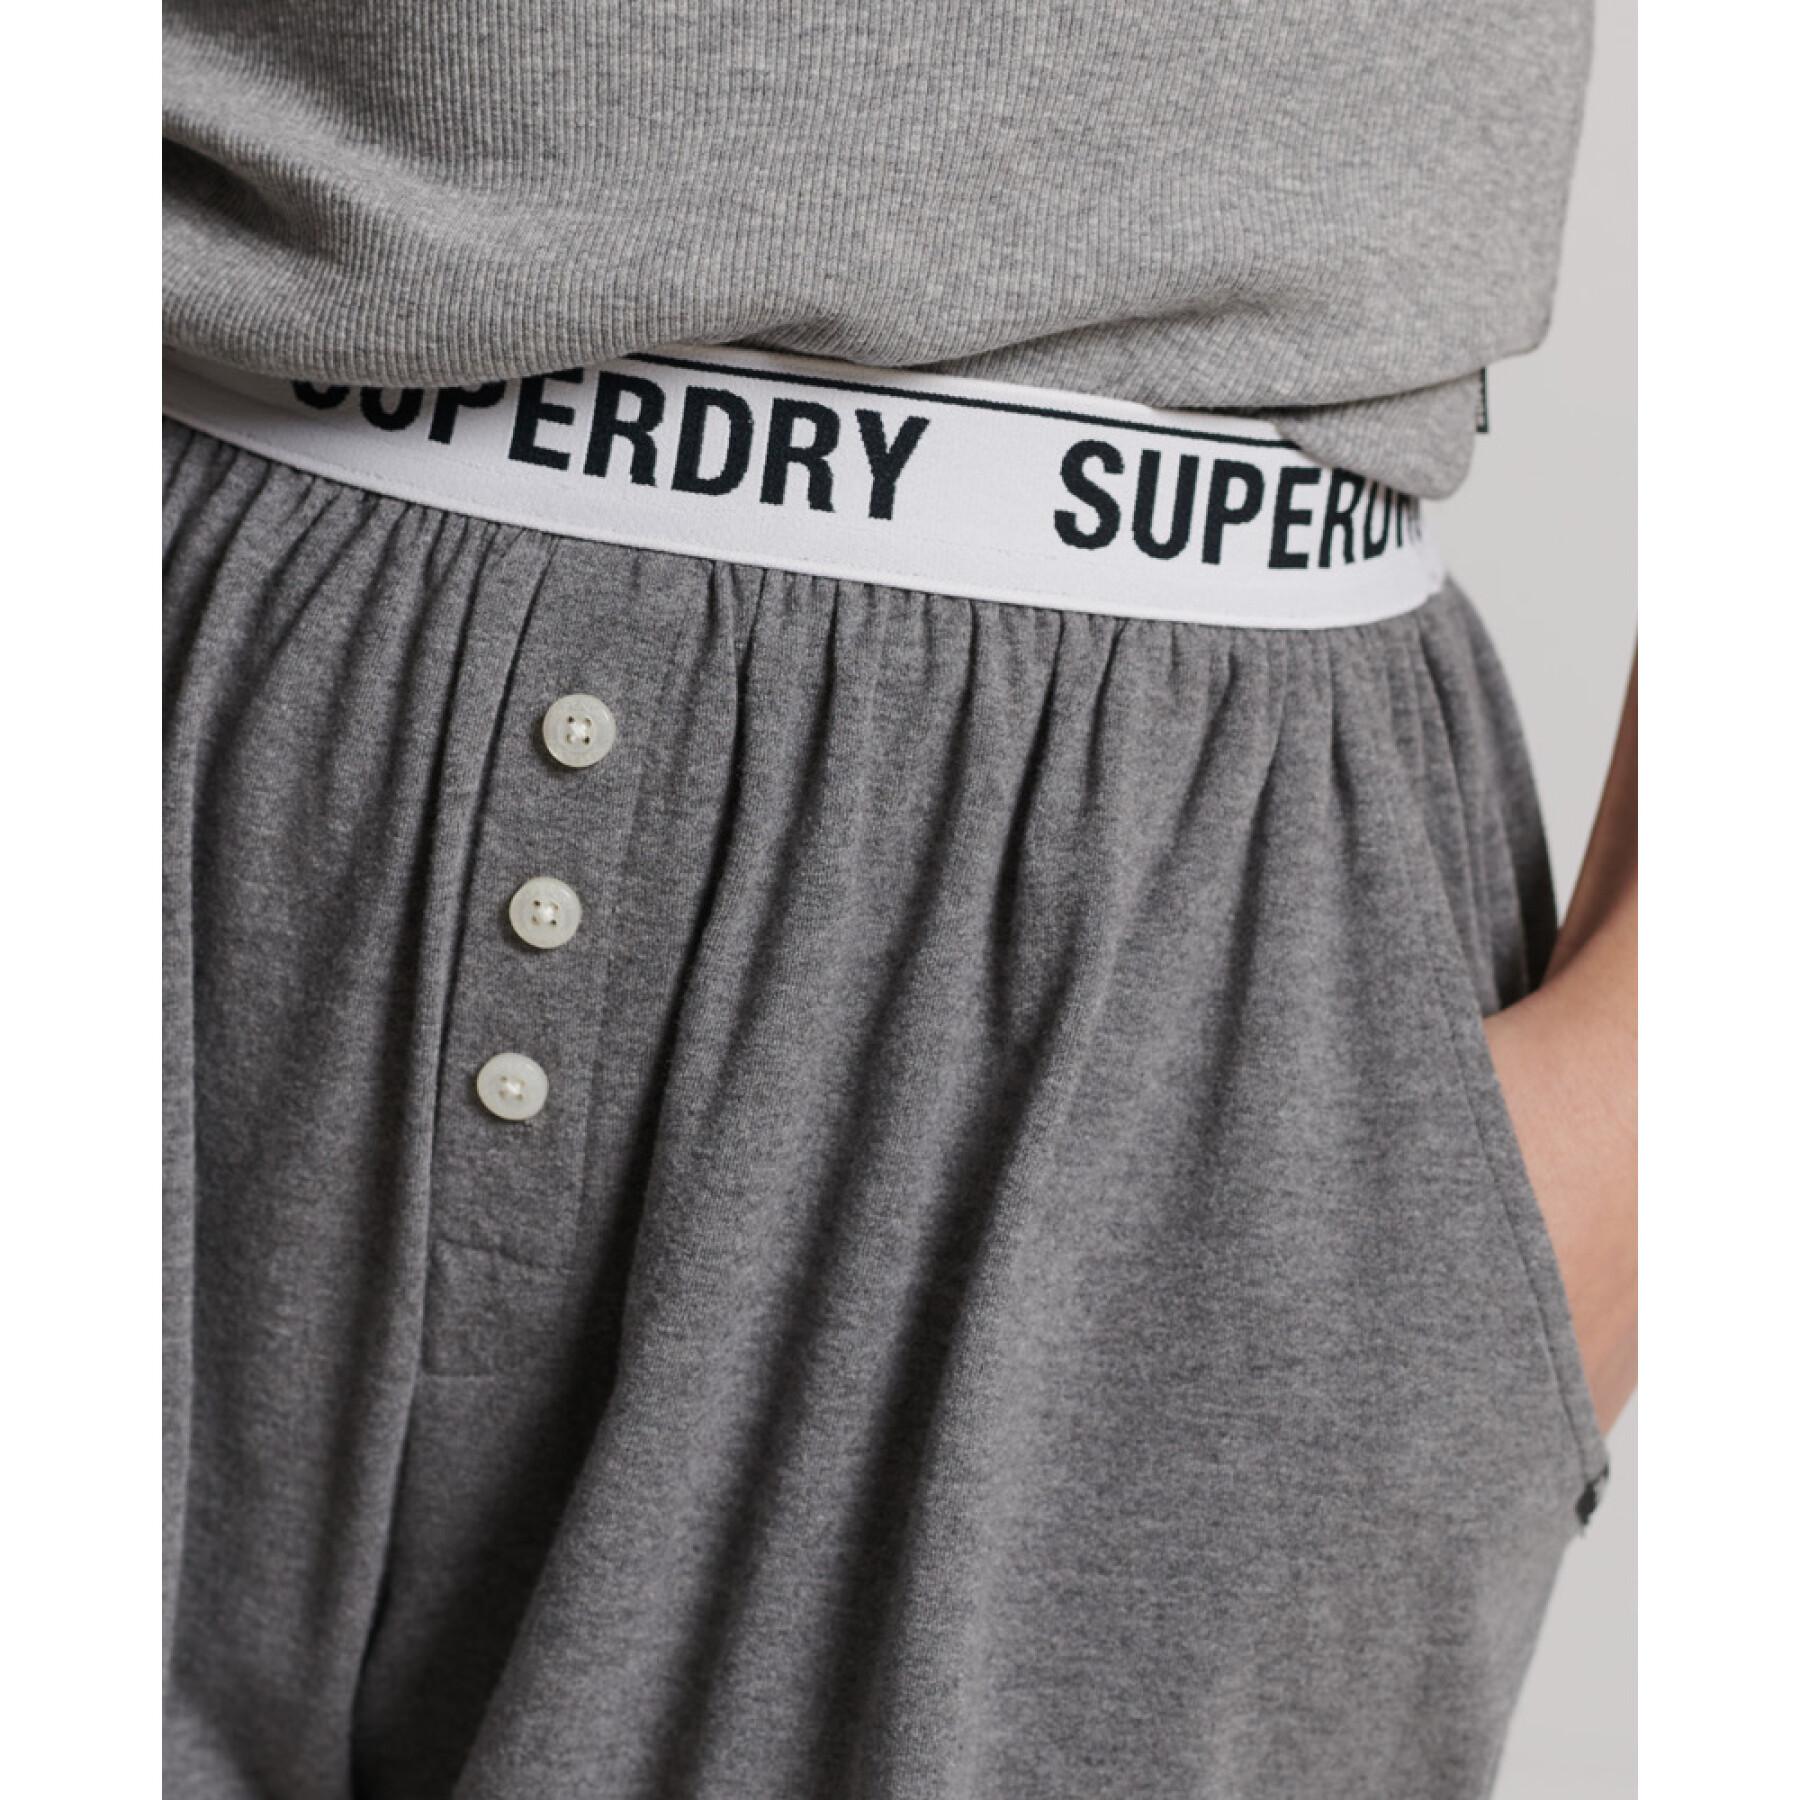 Women's shorts Superdry Pyjama